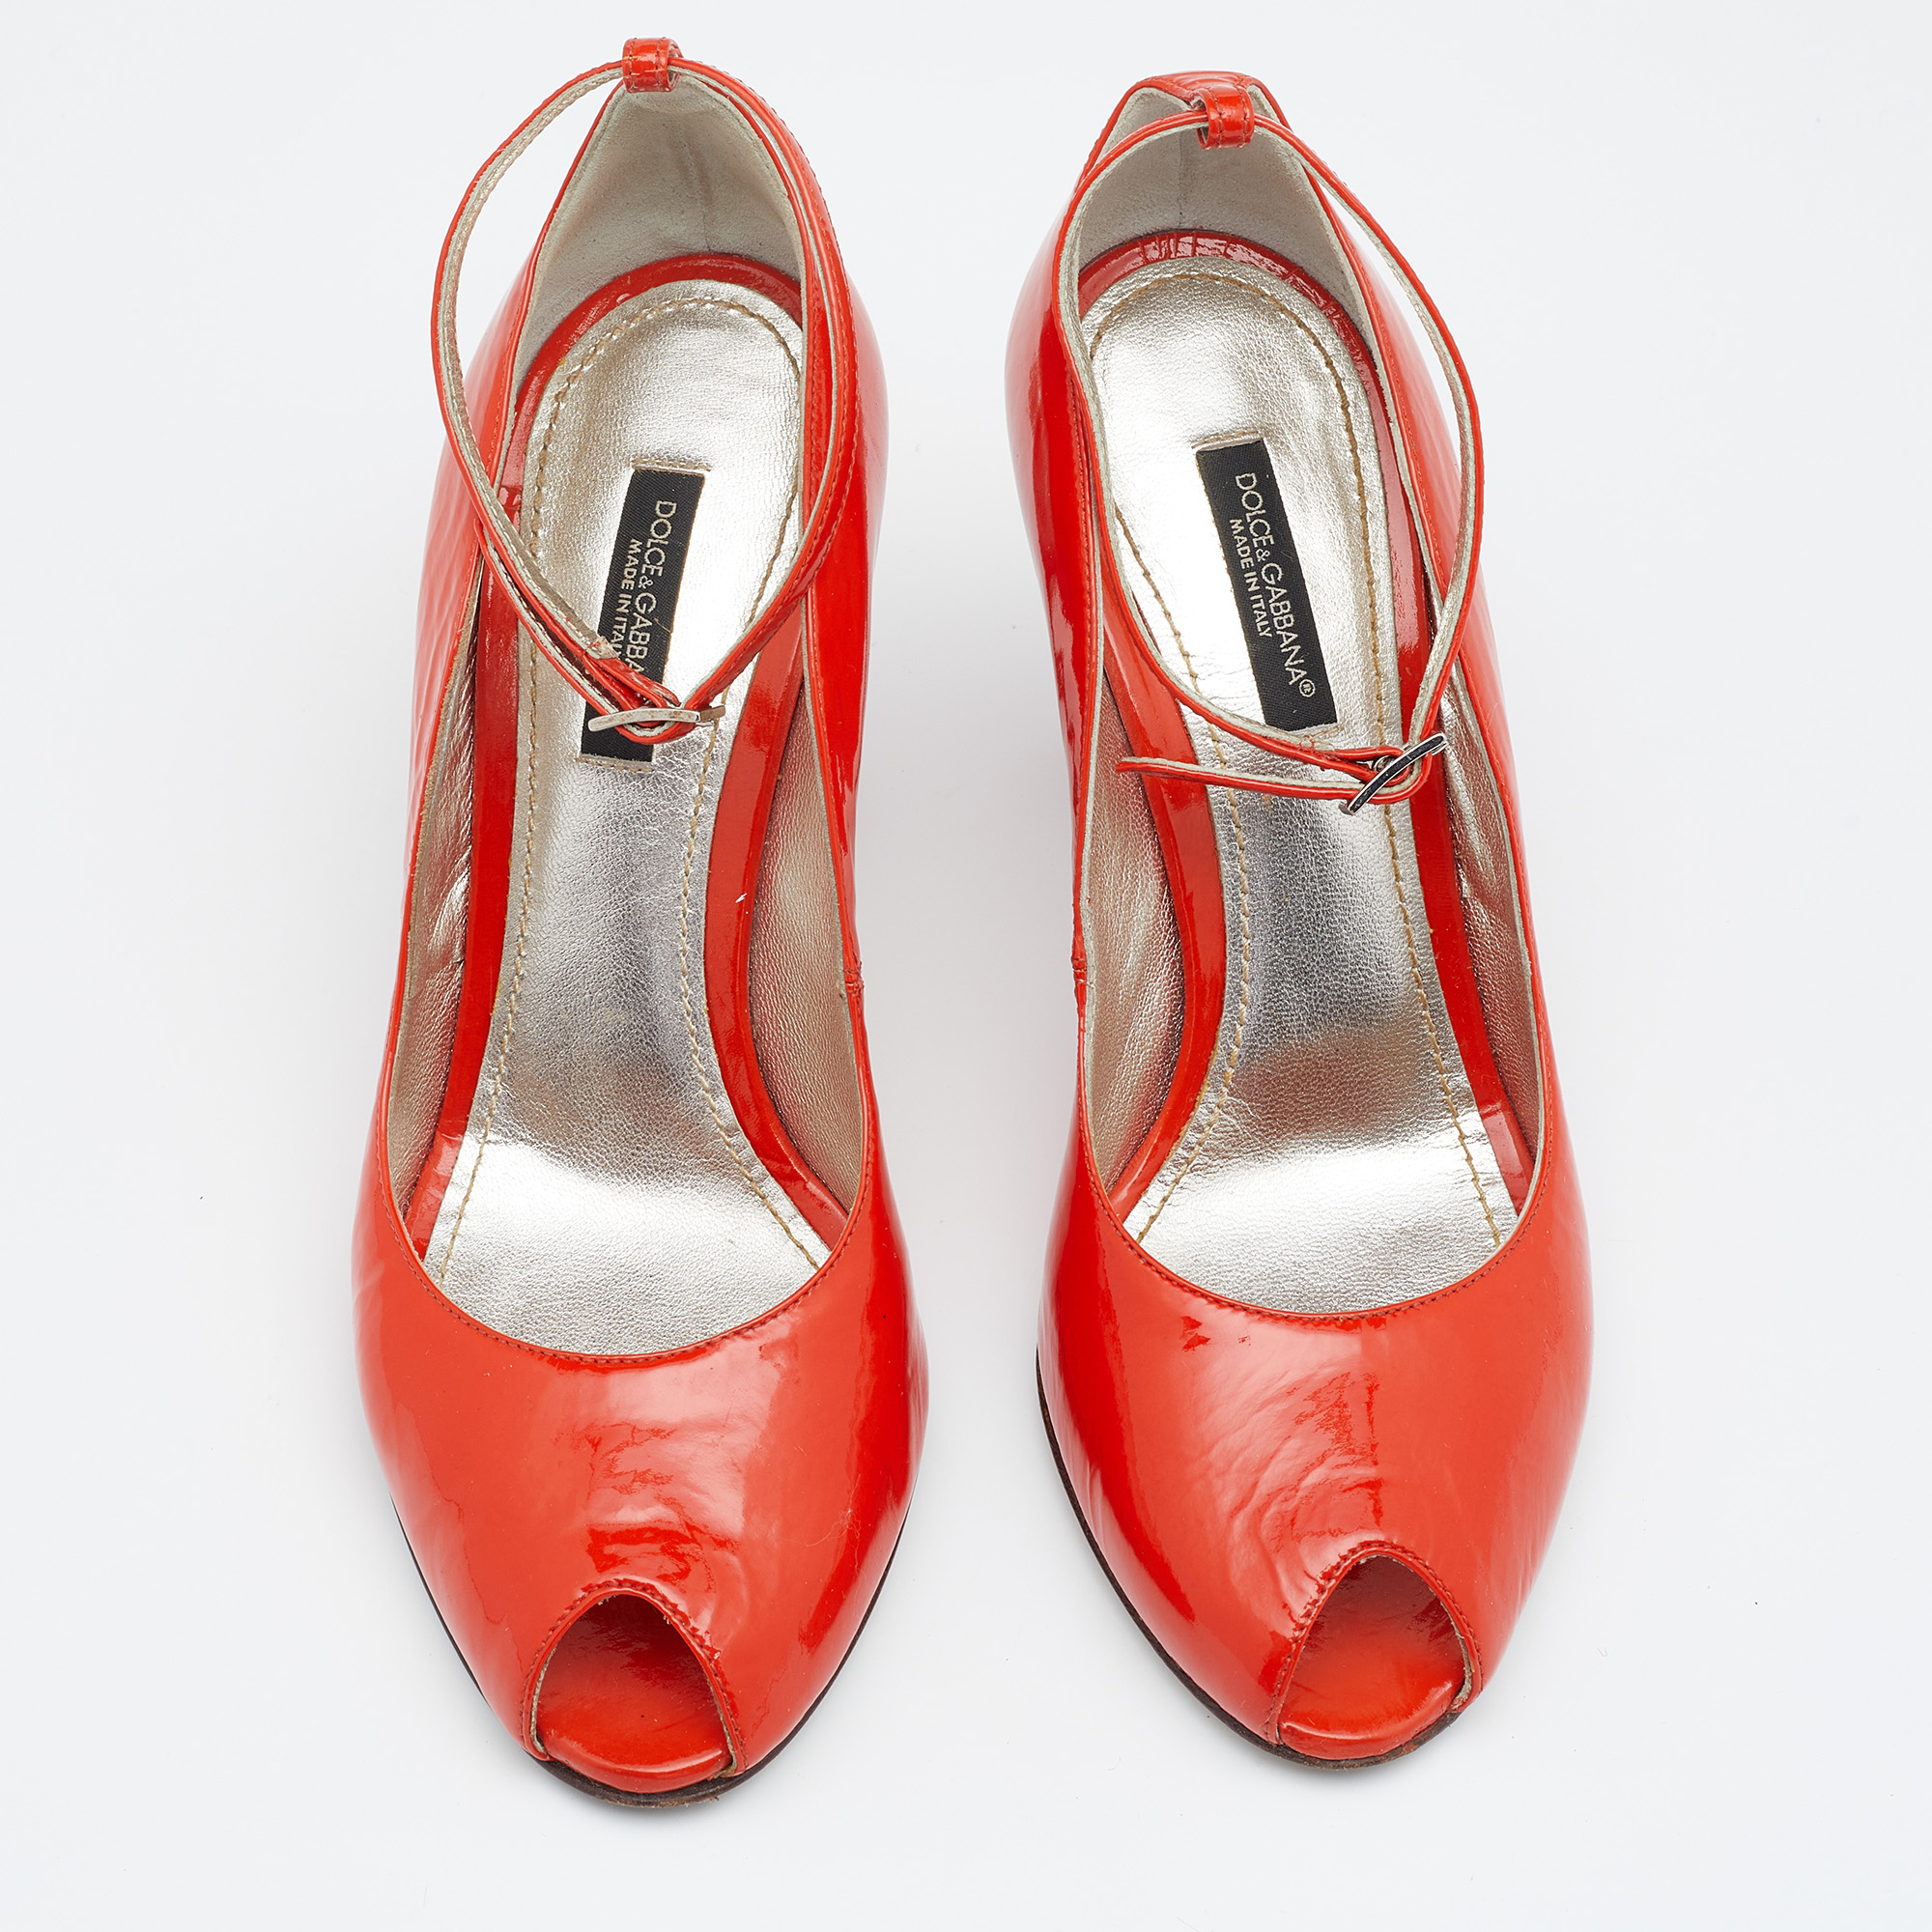 Dolce & Gabbana Orange Patent Leather Ankle Strap Sandals Size 36